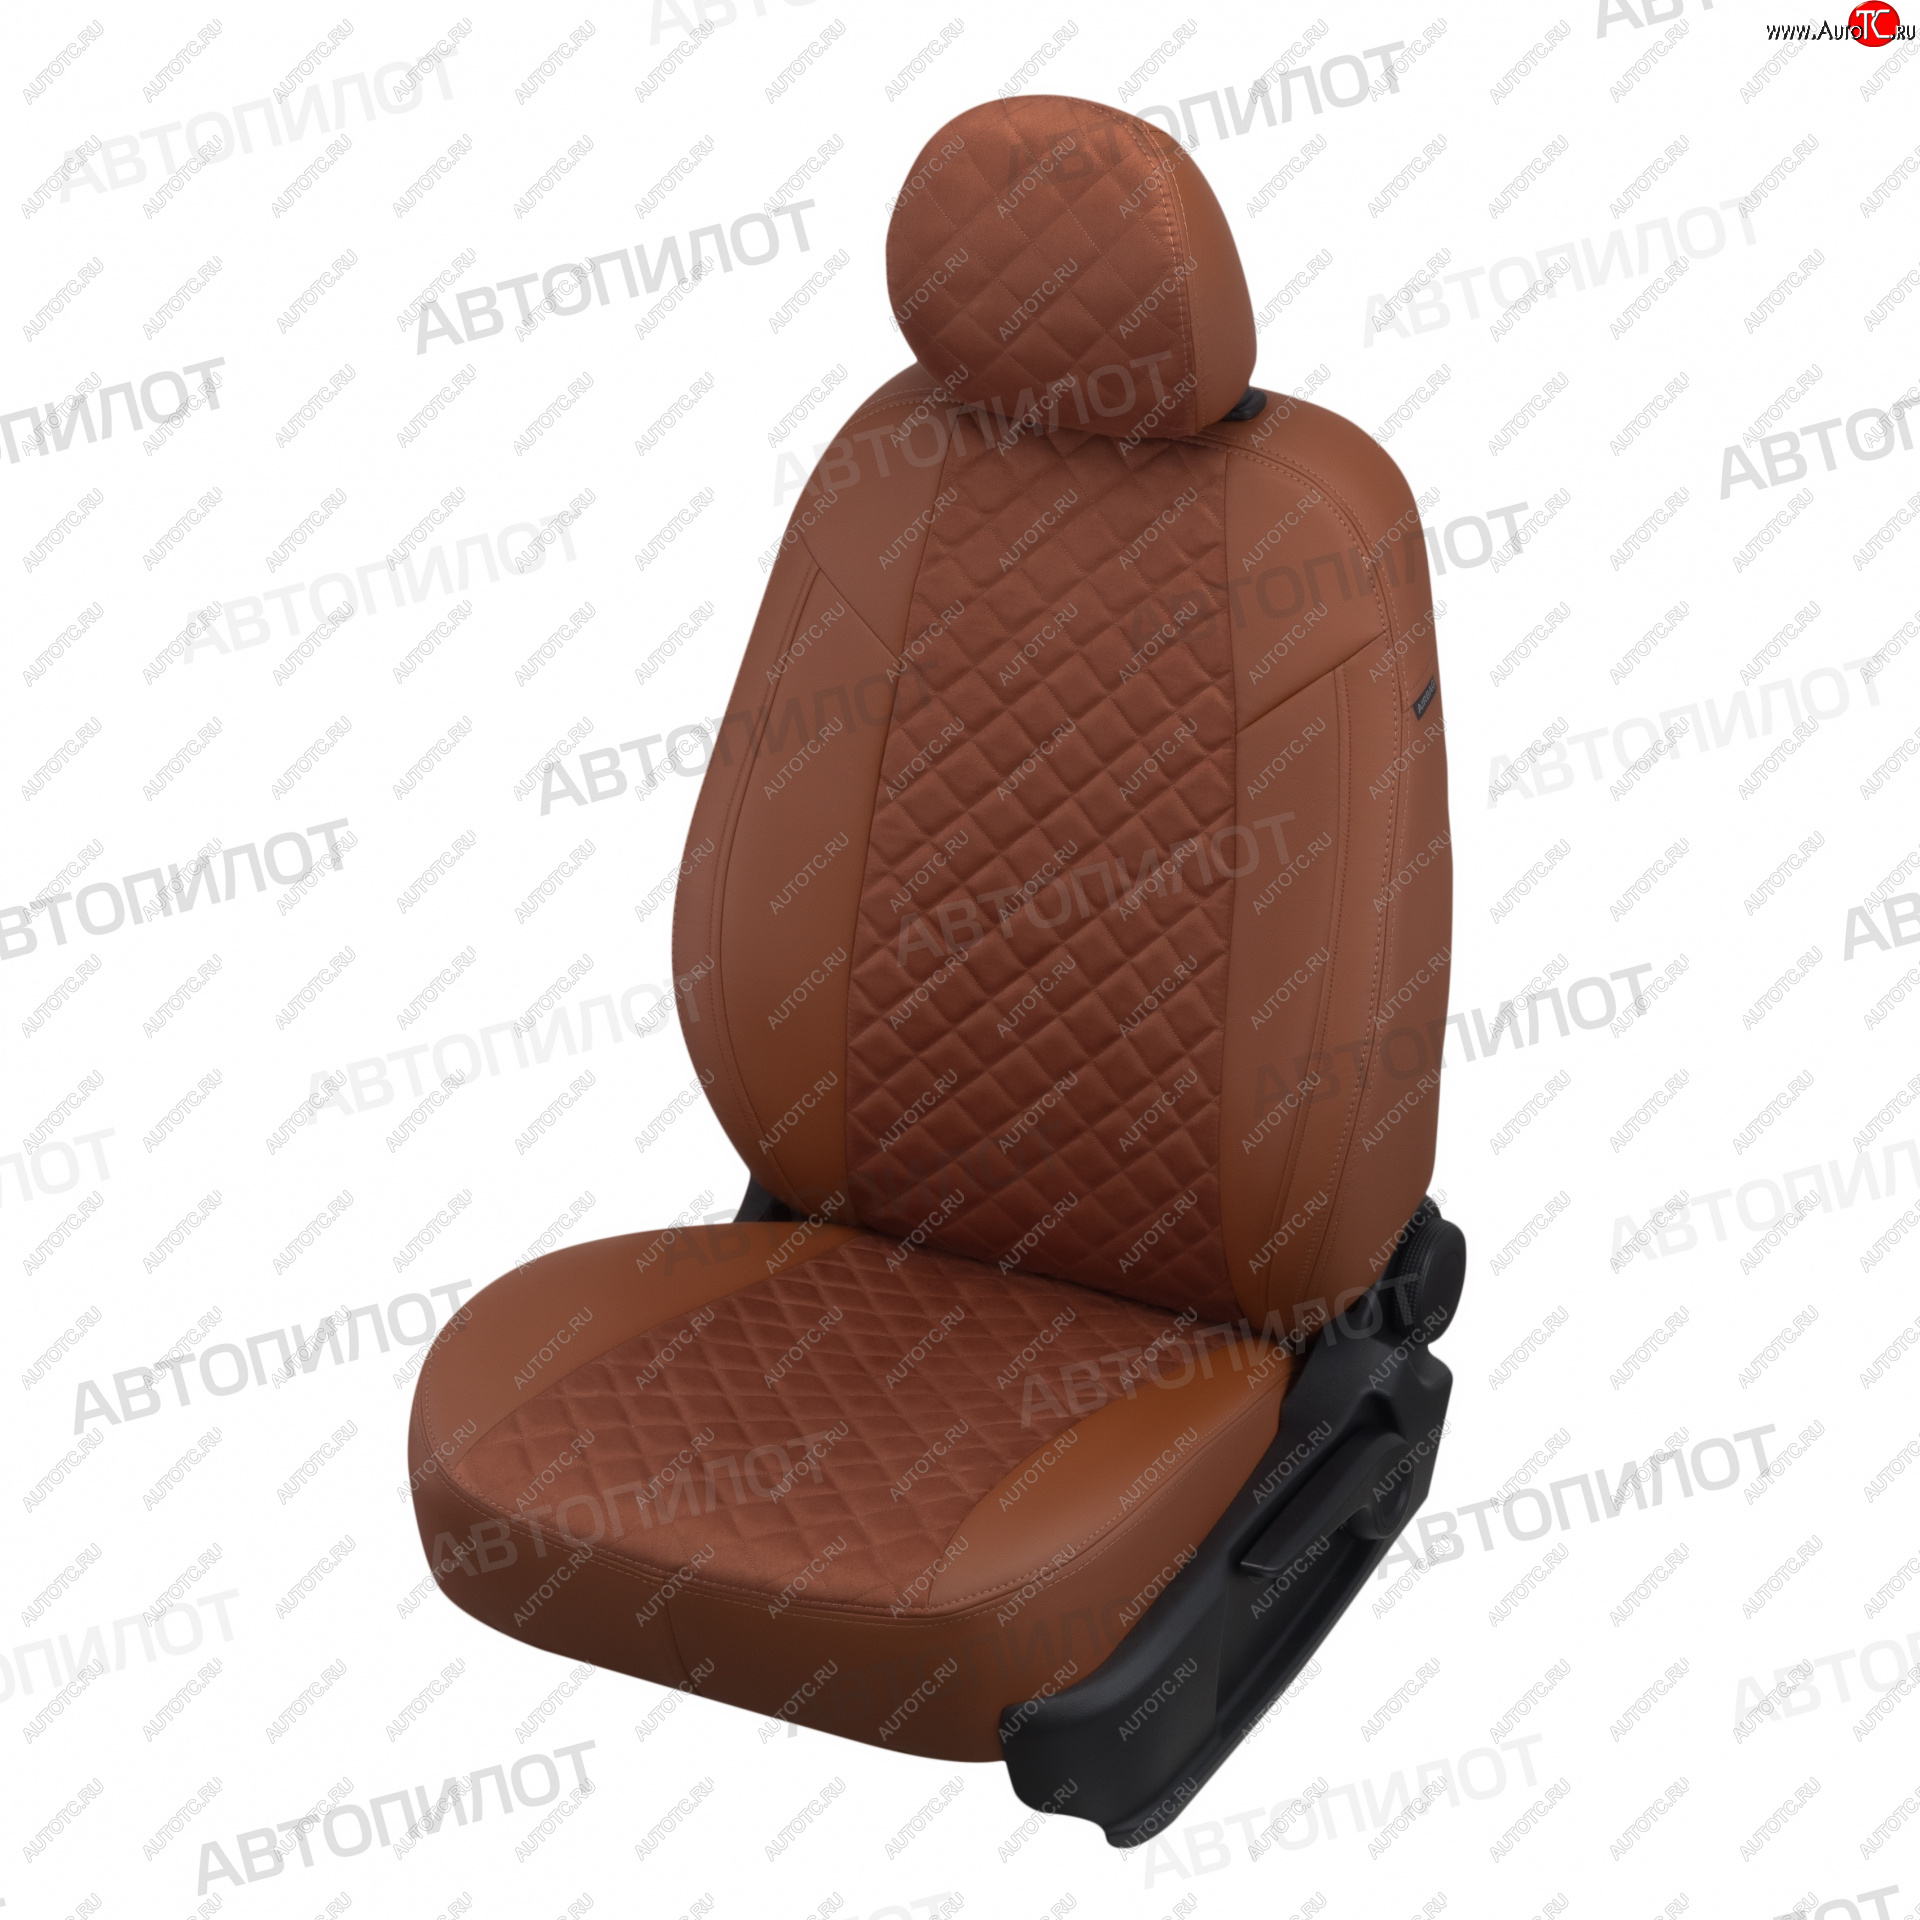 7 599 р. Чехлы сидений (экокожа/алькантара) Автопилот Ромб BMW X1 E84 (2009-2015) (коричневый)